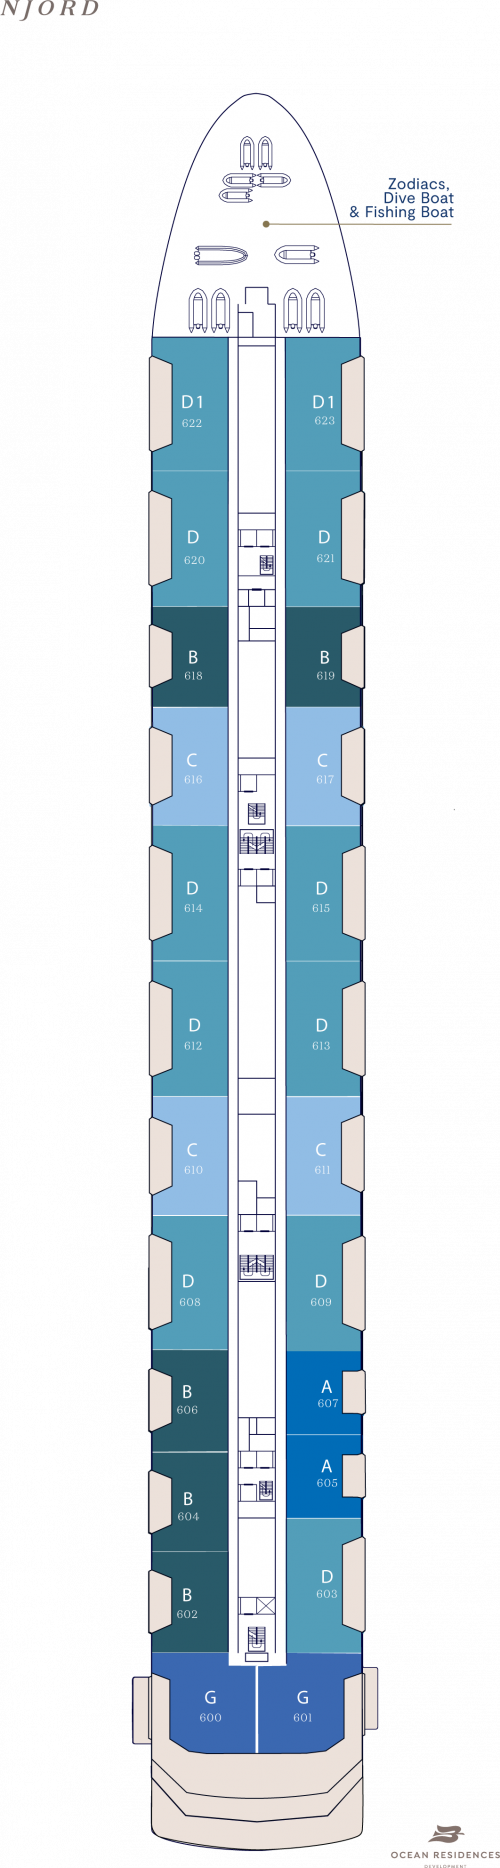 Superyacht Njord Deck 6